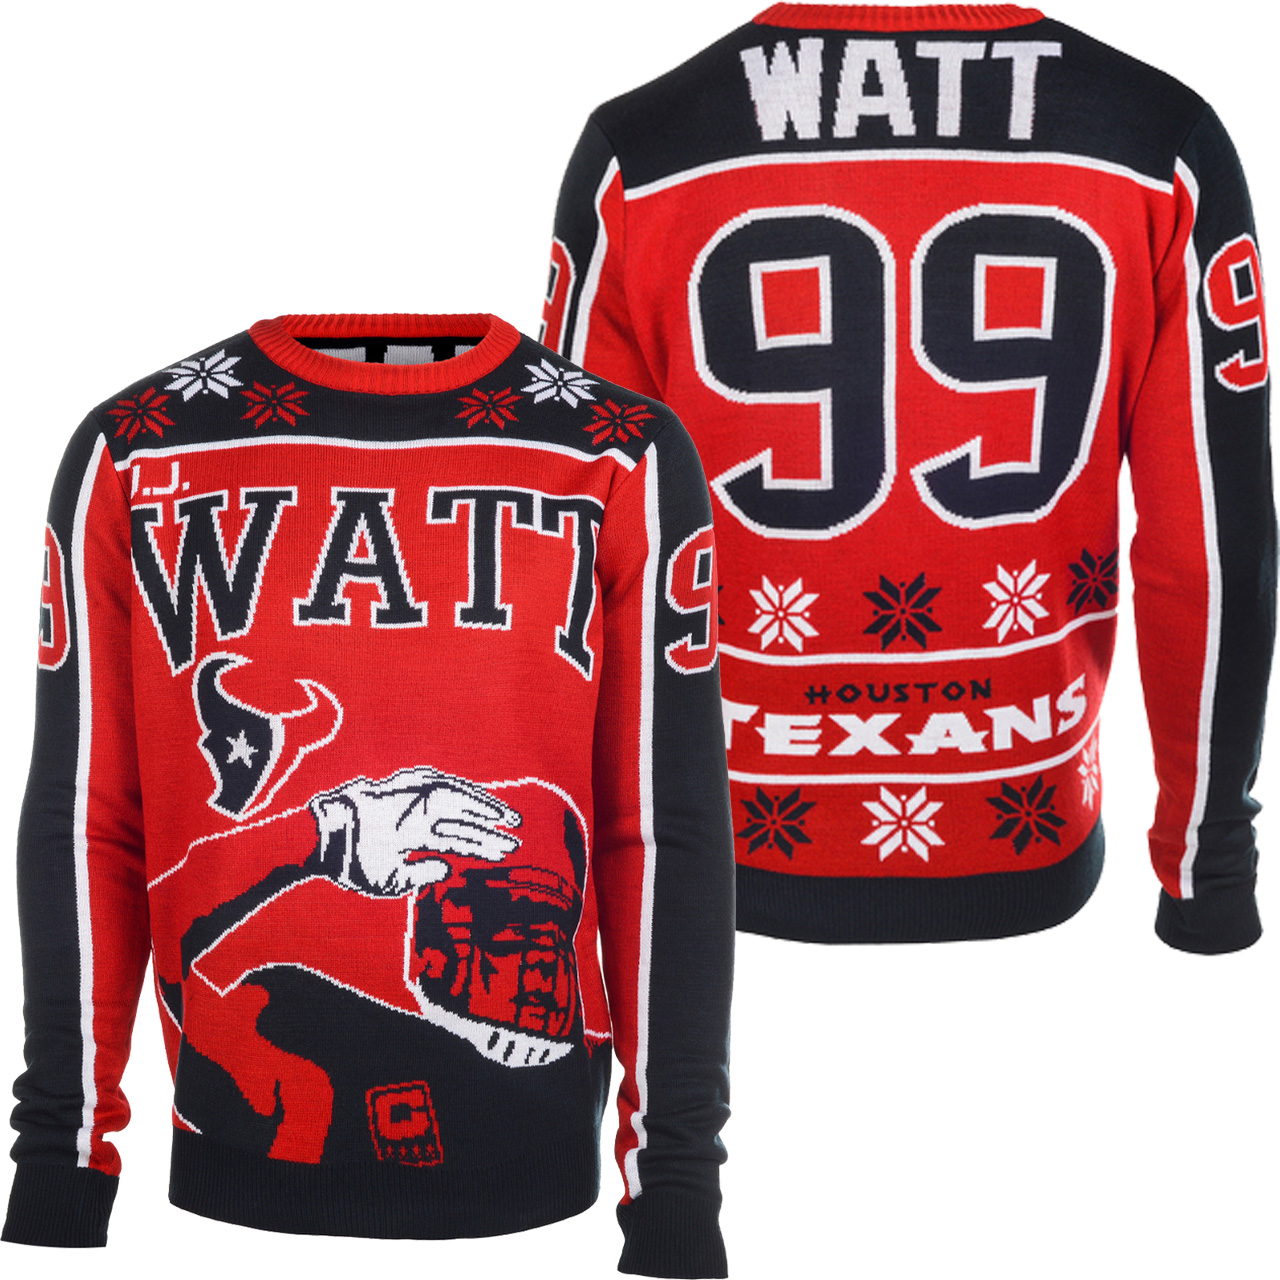 JJ Watt #99 Houston Texans NFL Player Ugly Sweater